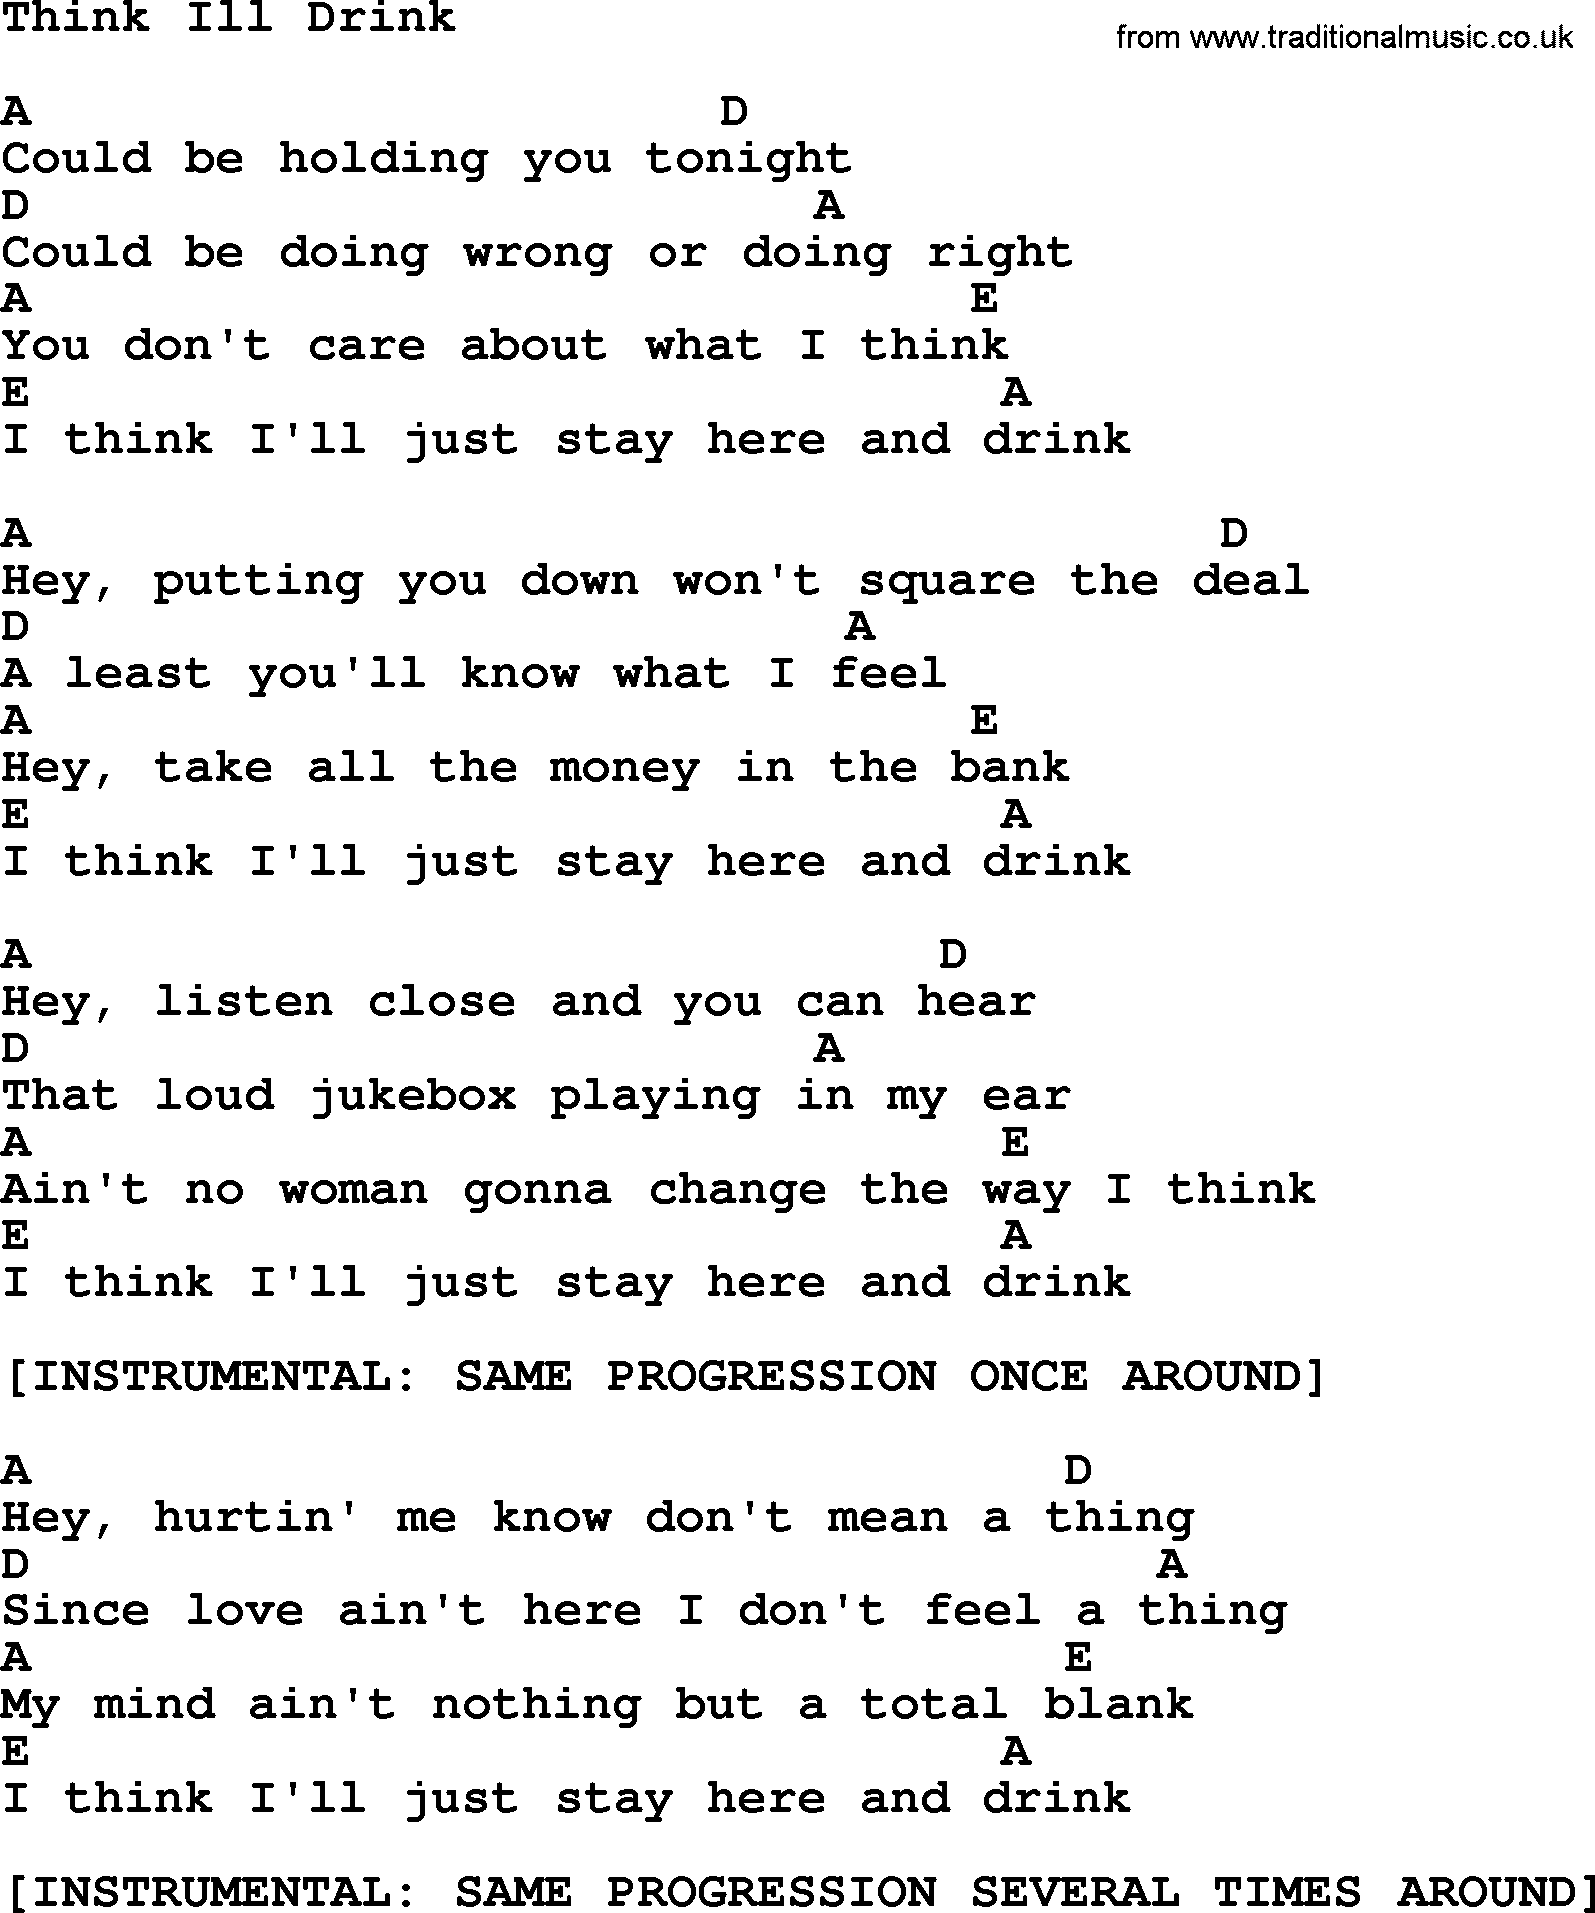 Merle Haggard song: Think Ill Drink, lyrics and chords